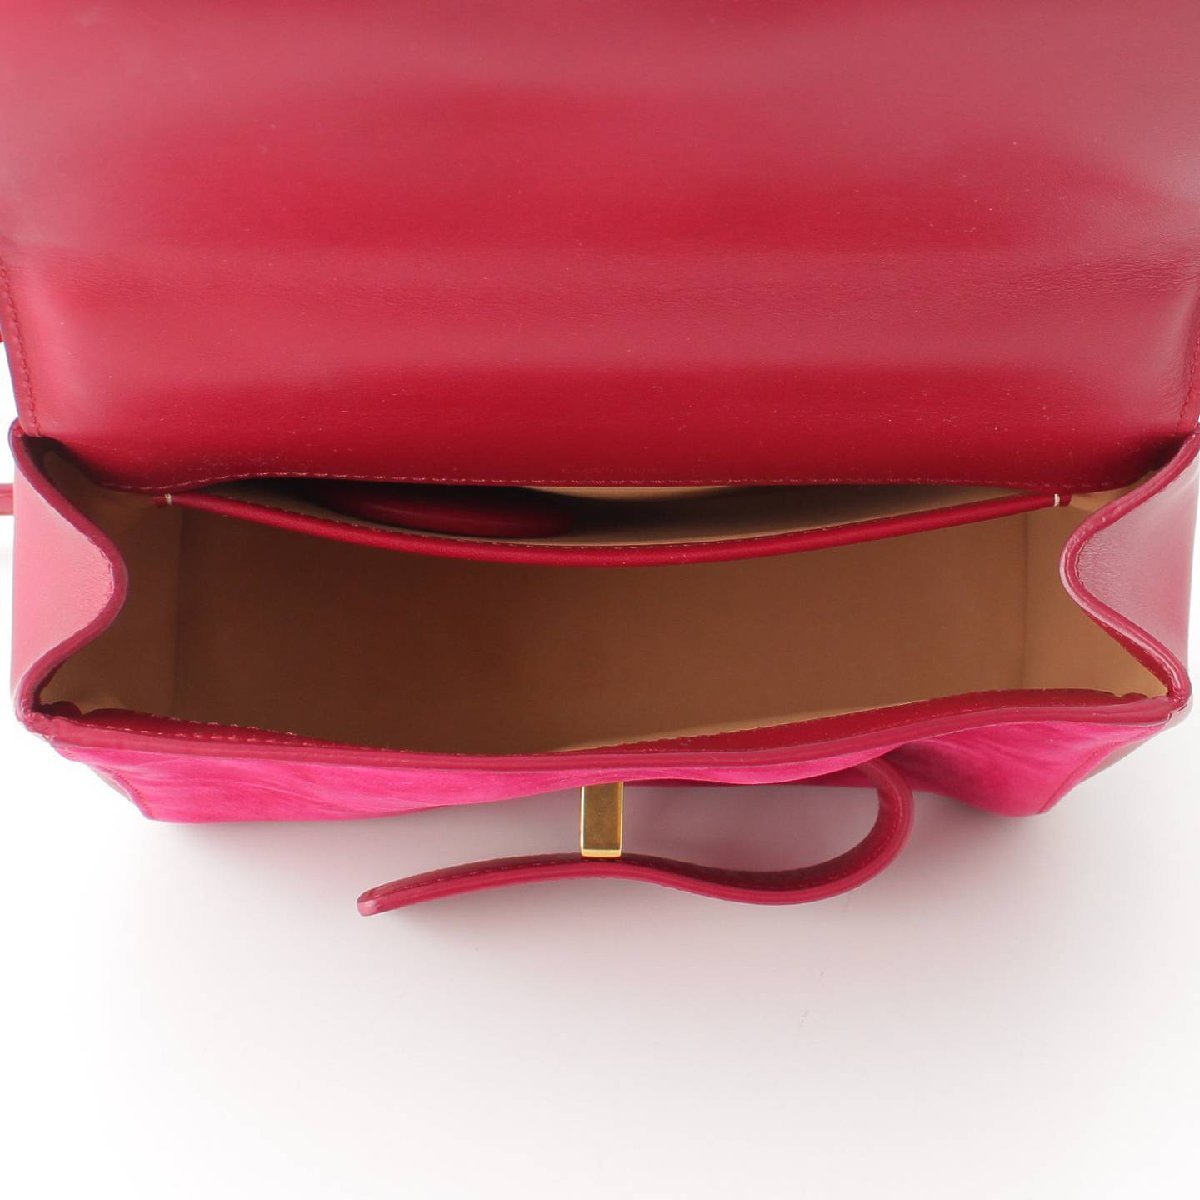 [ Dell vo-]Delvaux солнечный plisi-m замша × кожа сумка на плечо красный [ б/у ][ стандартный товар гарантия ]195030